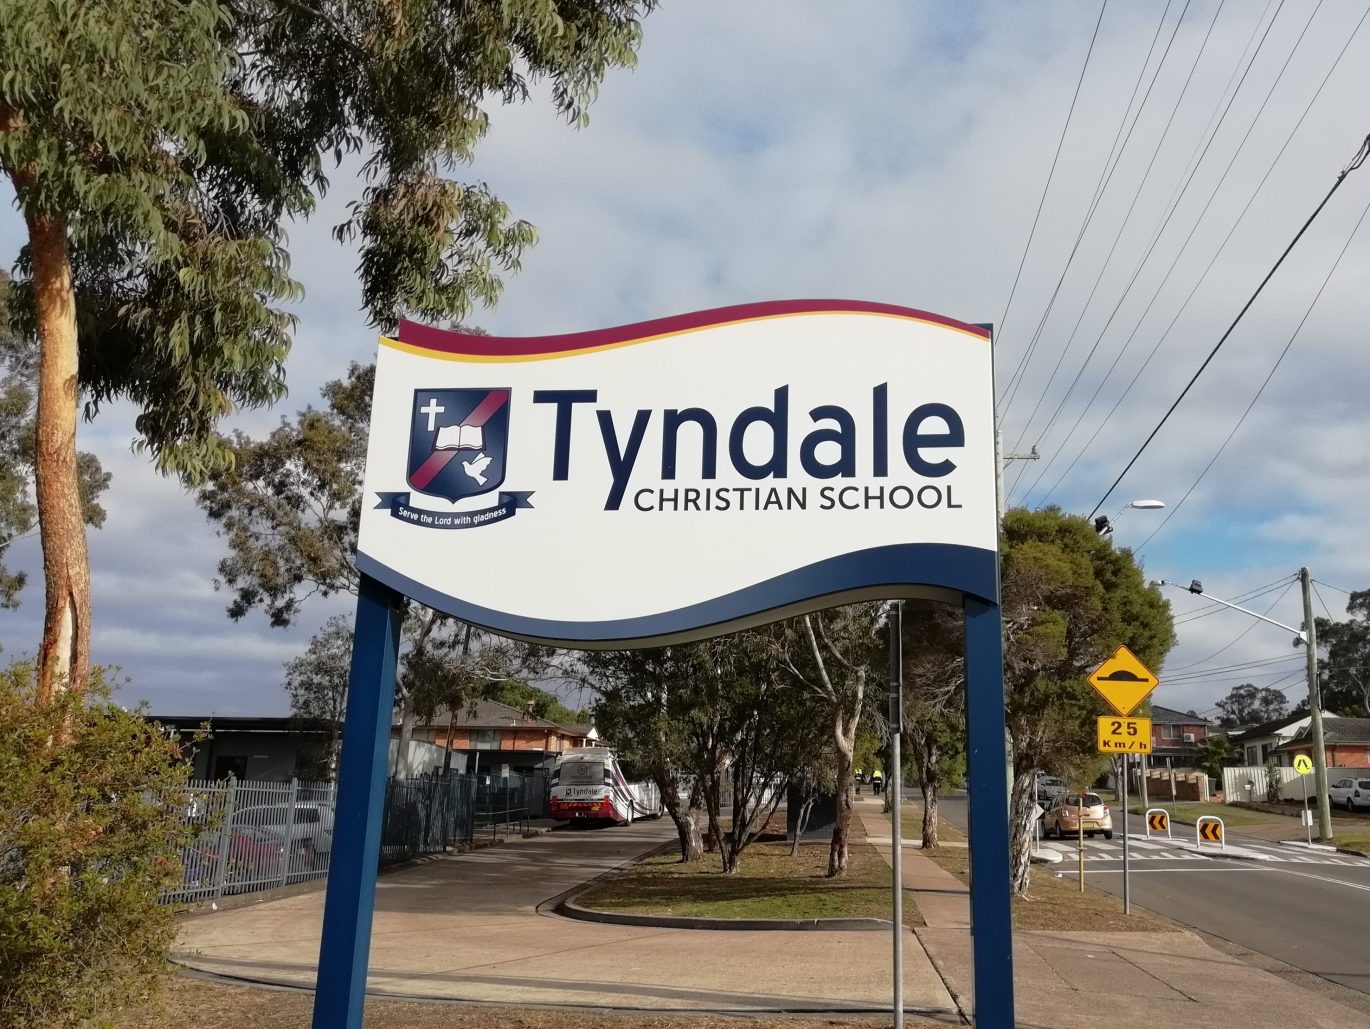 Teammitglied Bianca besucht die Tyndale Christian School in Australien